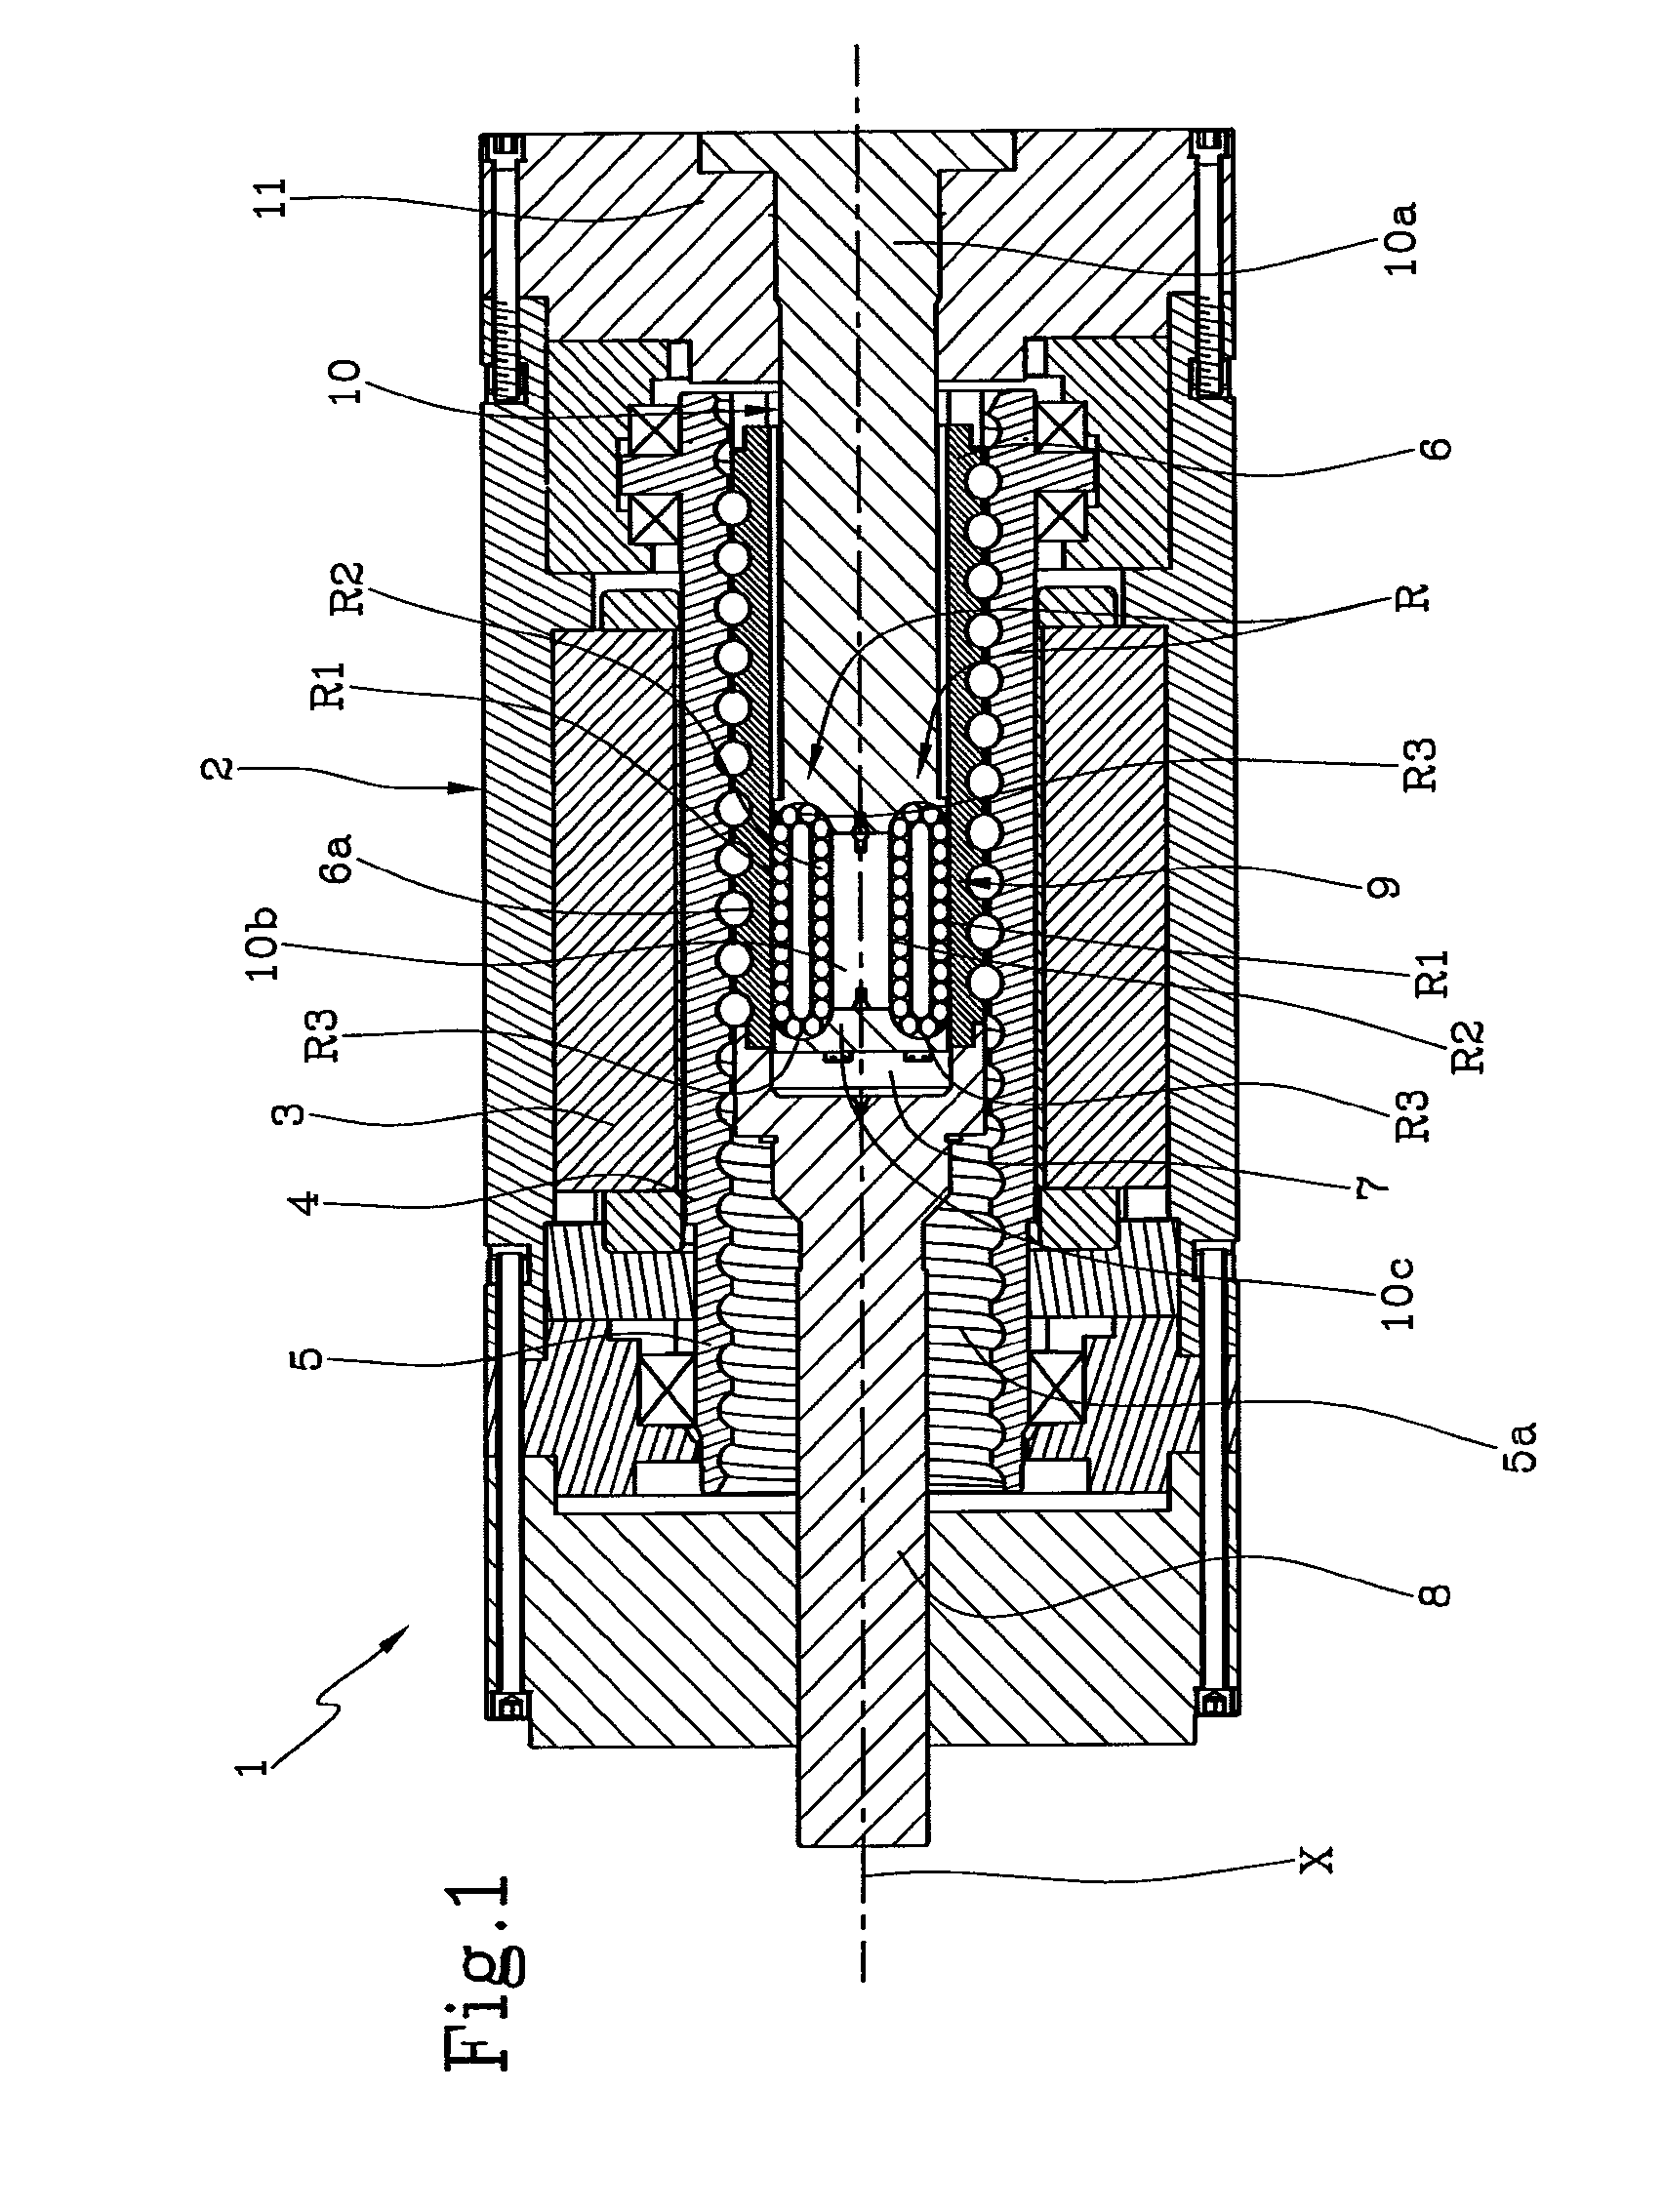 Linear electro-mechanical actuator